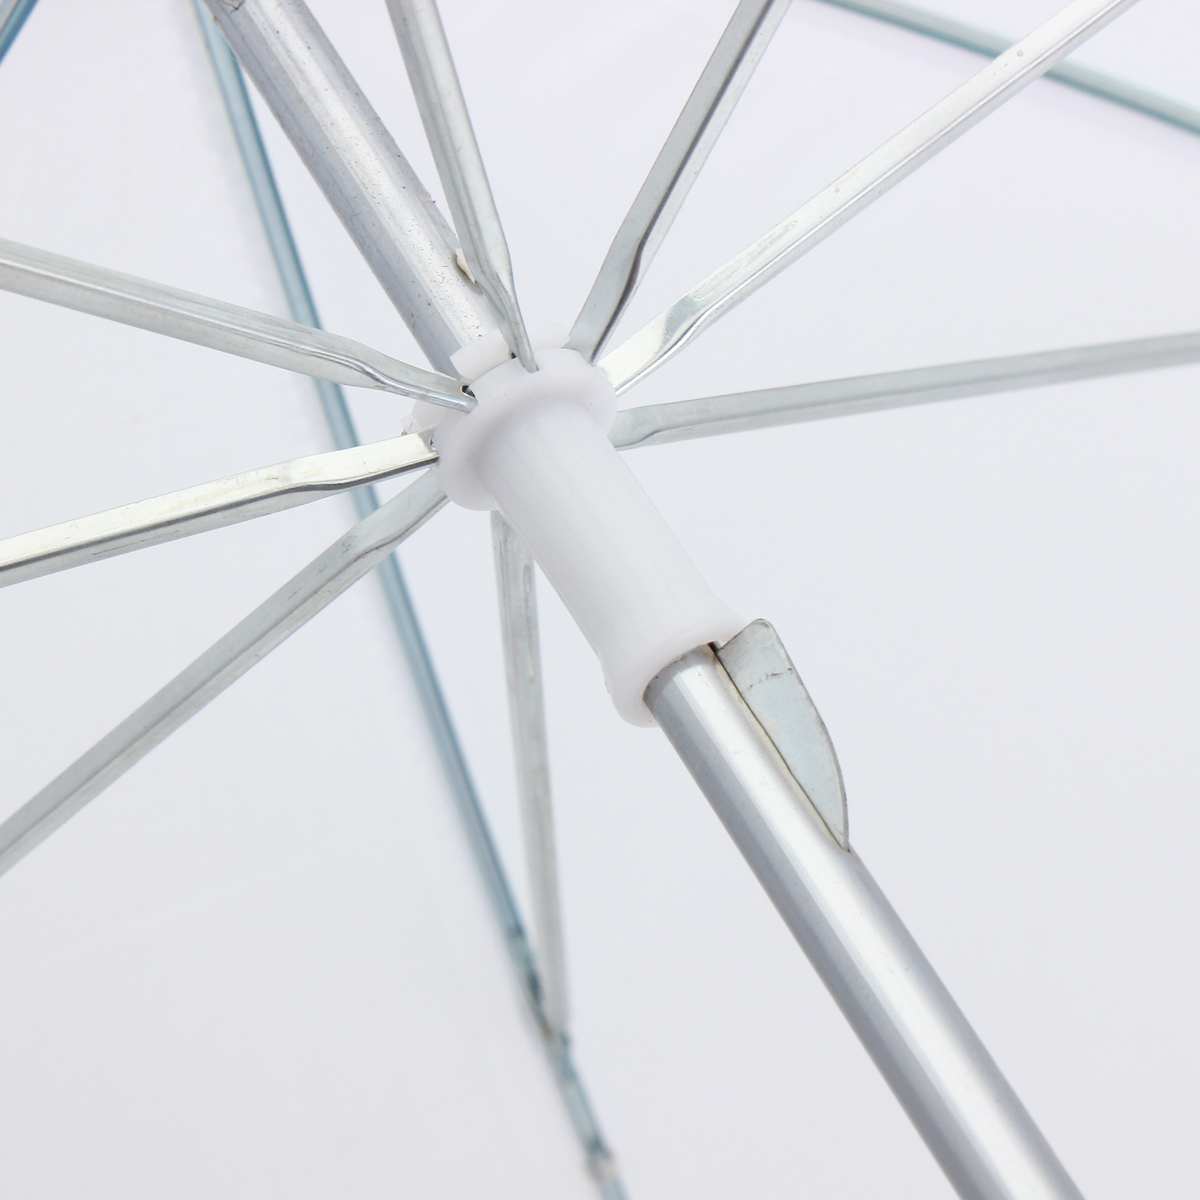 43 inch Photography Studio Video Photo Light Umbrella White Translucent Diffuser flash Soft Umbrella Accessories